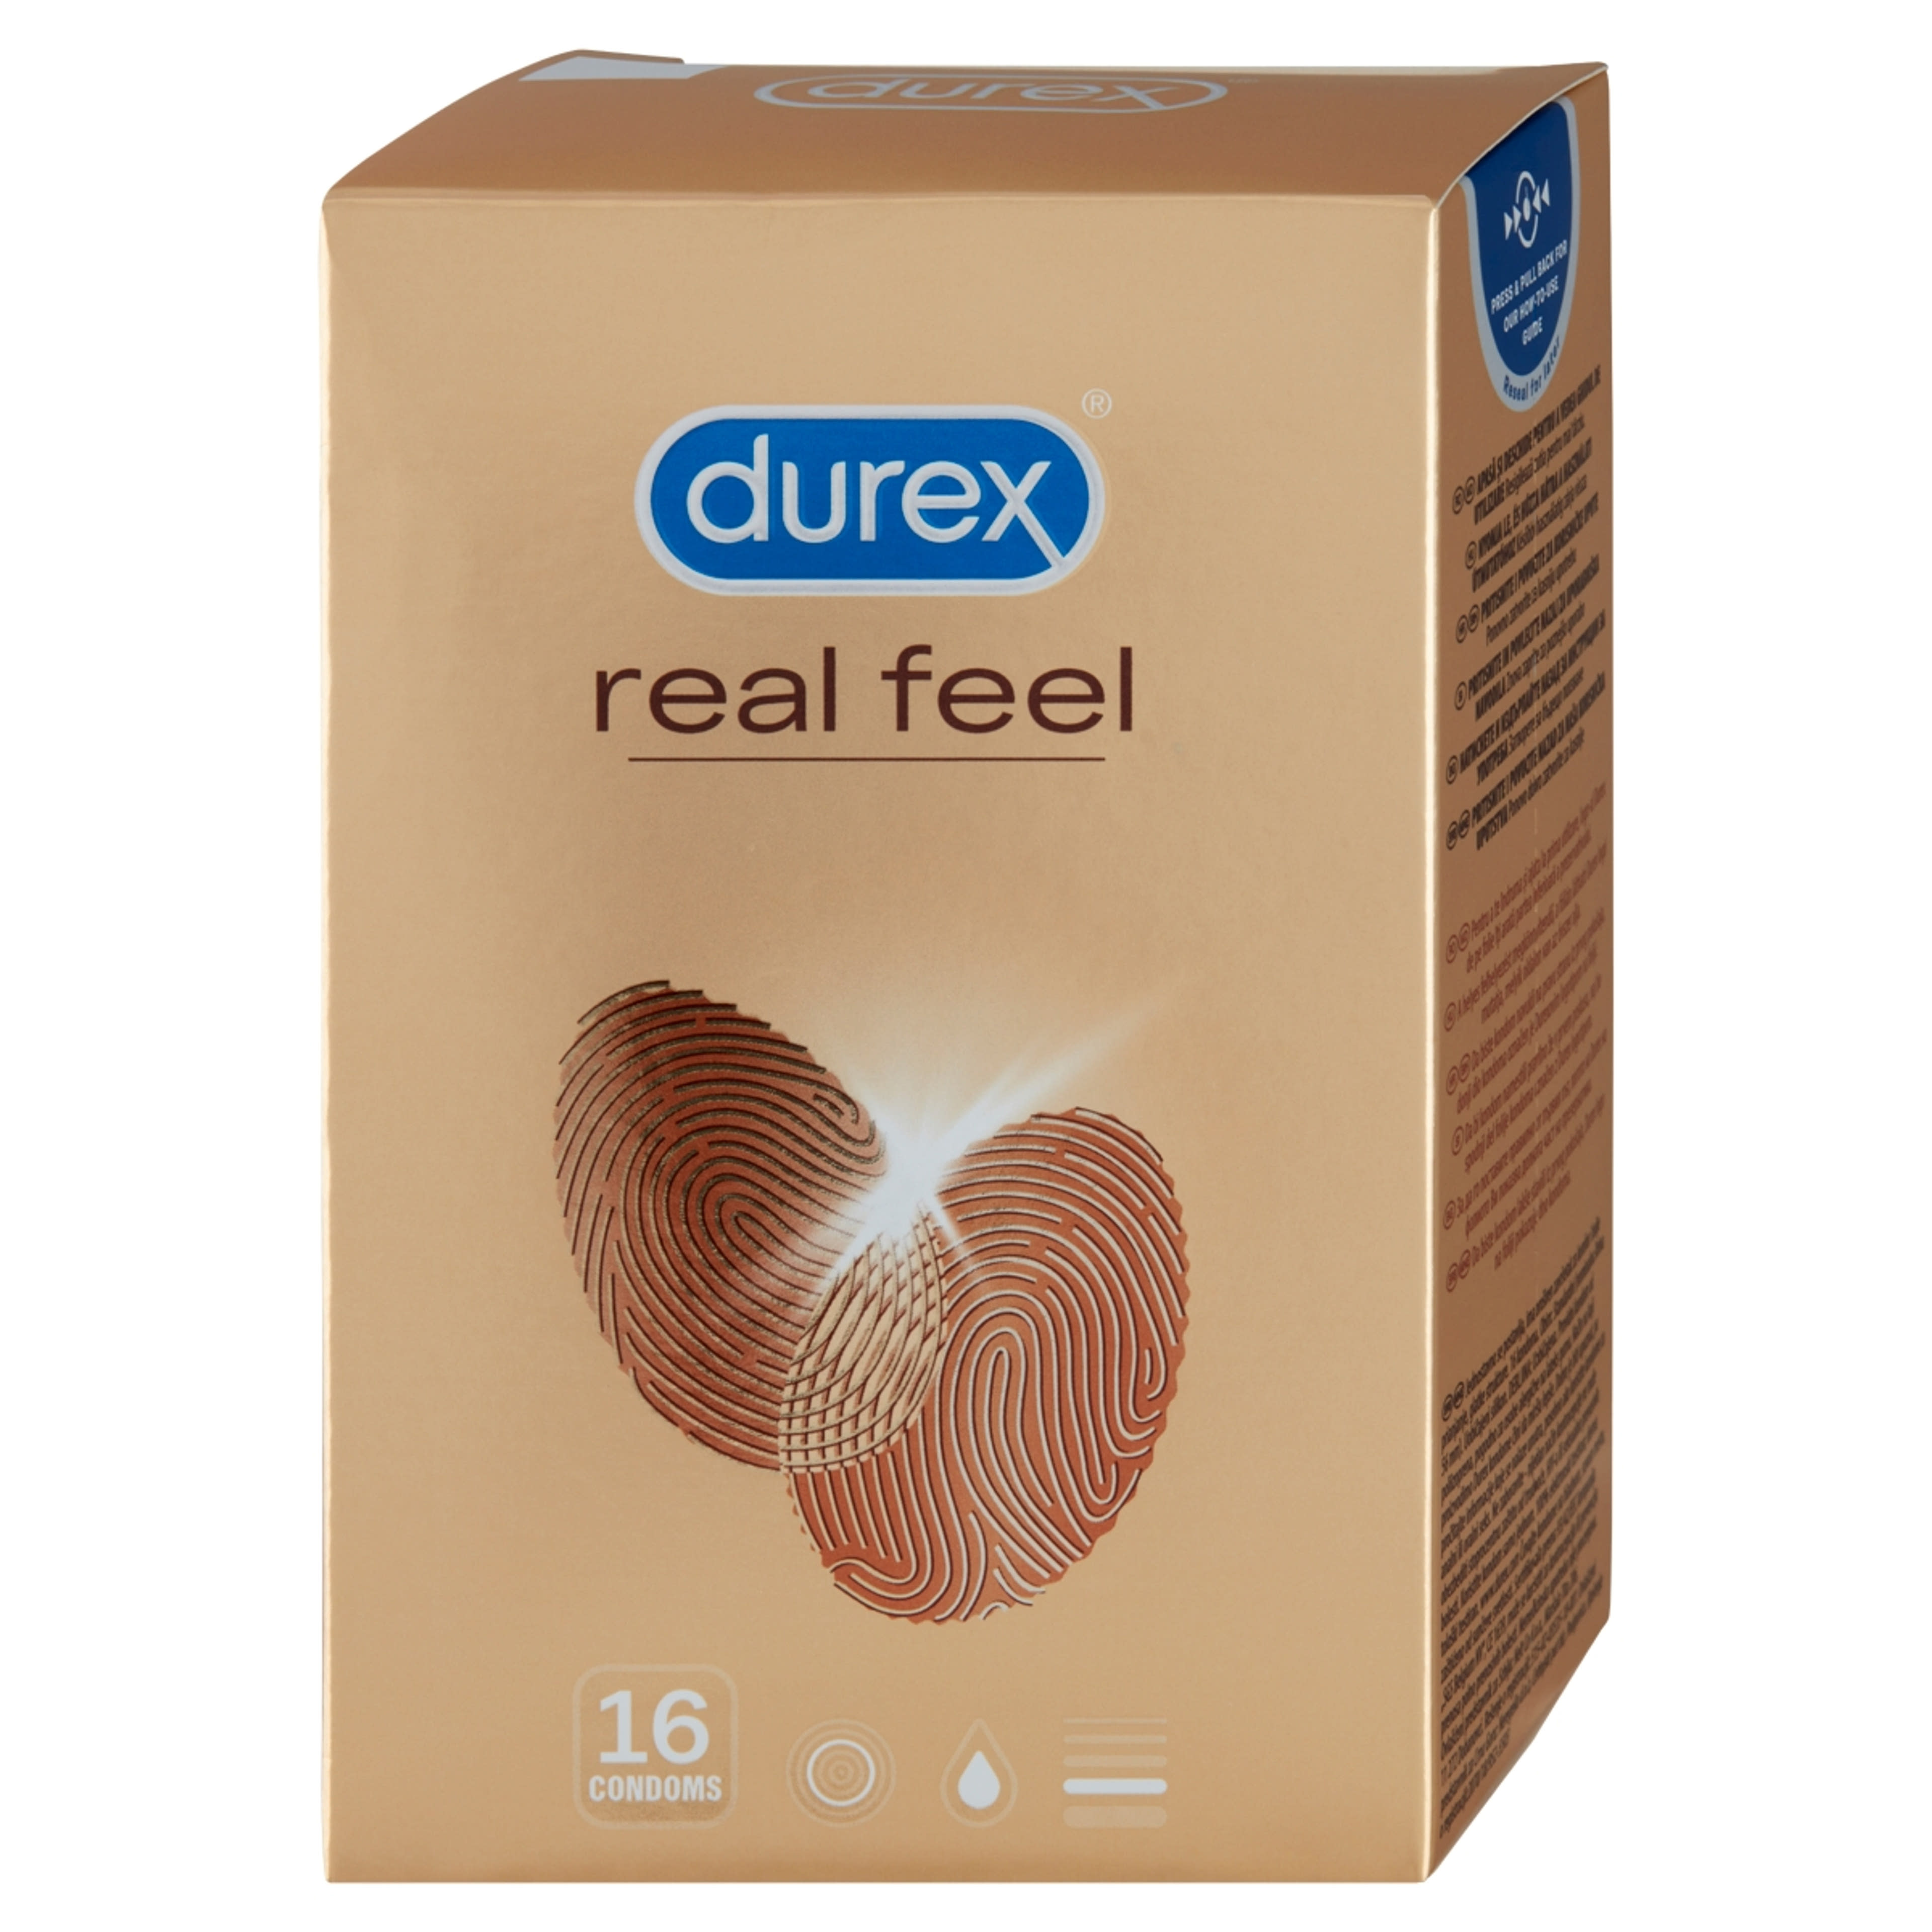 Durex Real Feel óvszer - 16 db-5